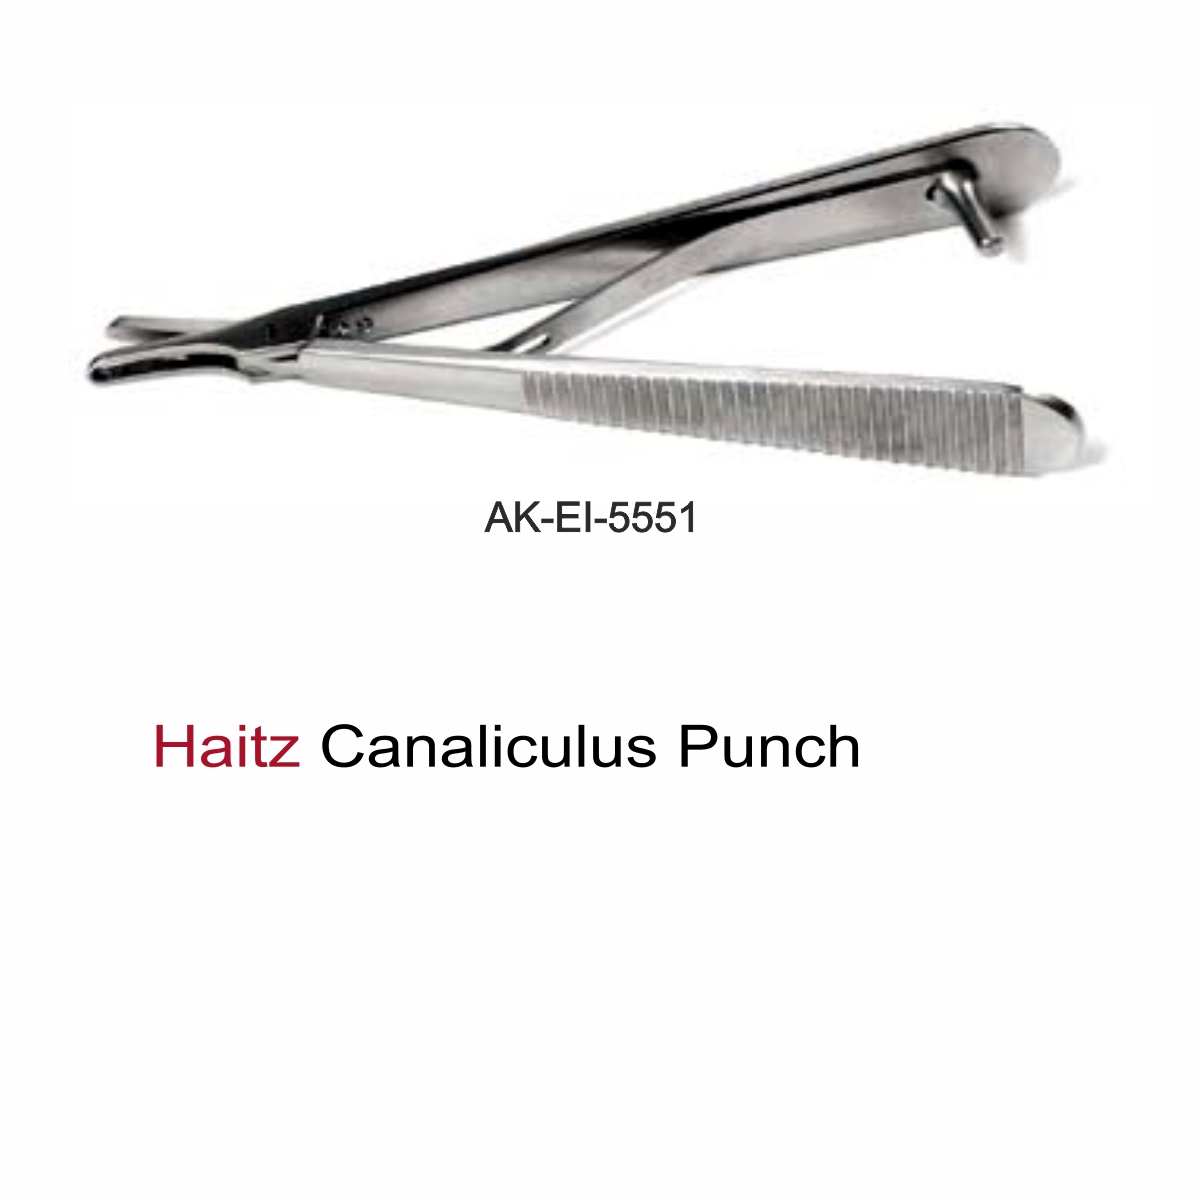 Haitz Canaliculus Punch